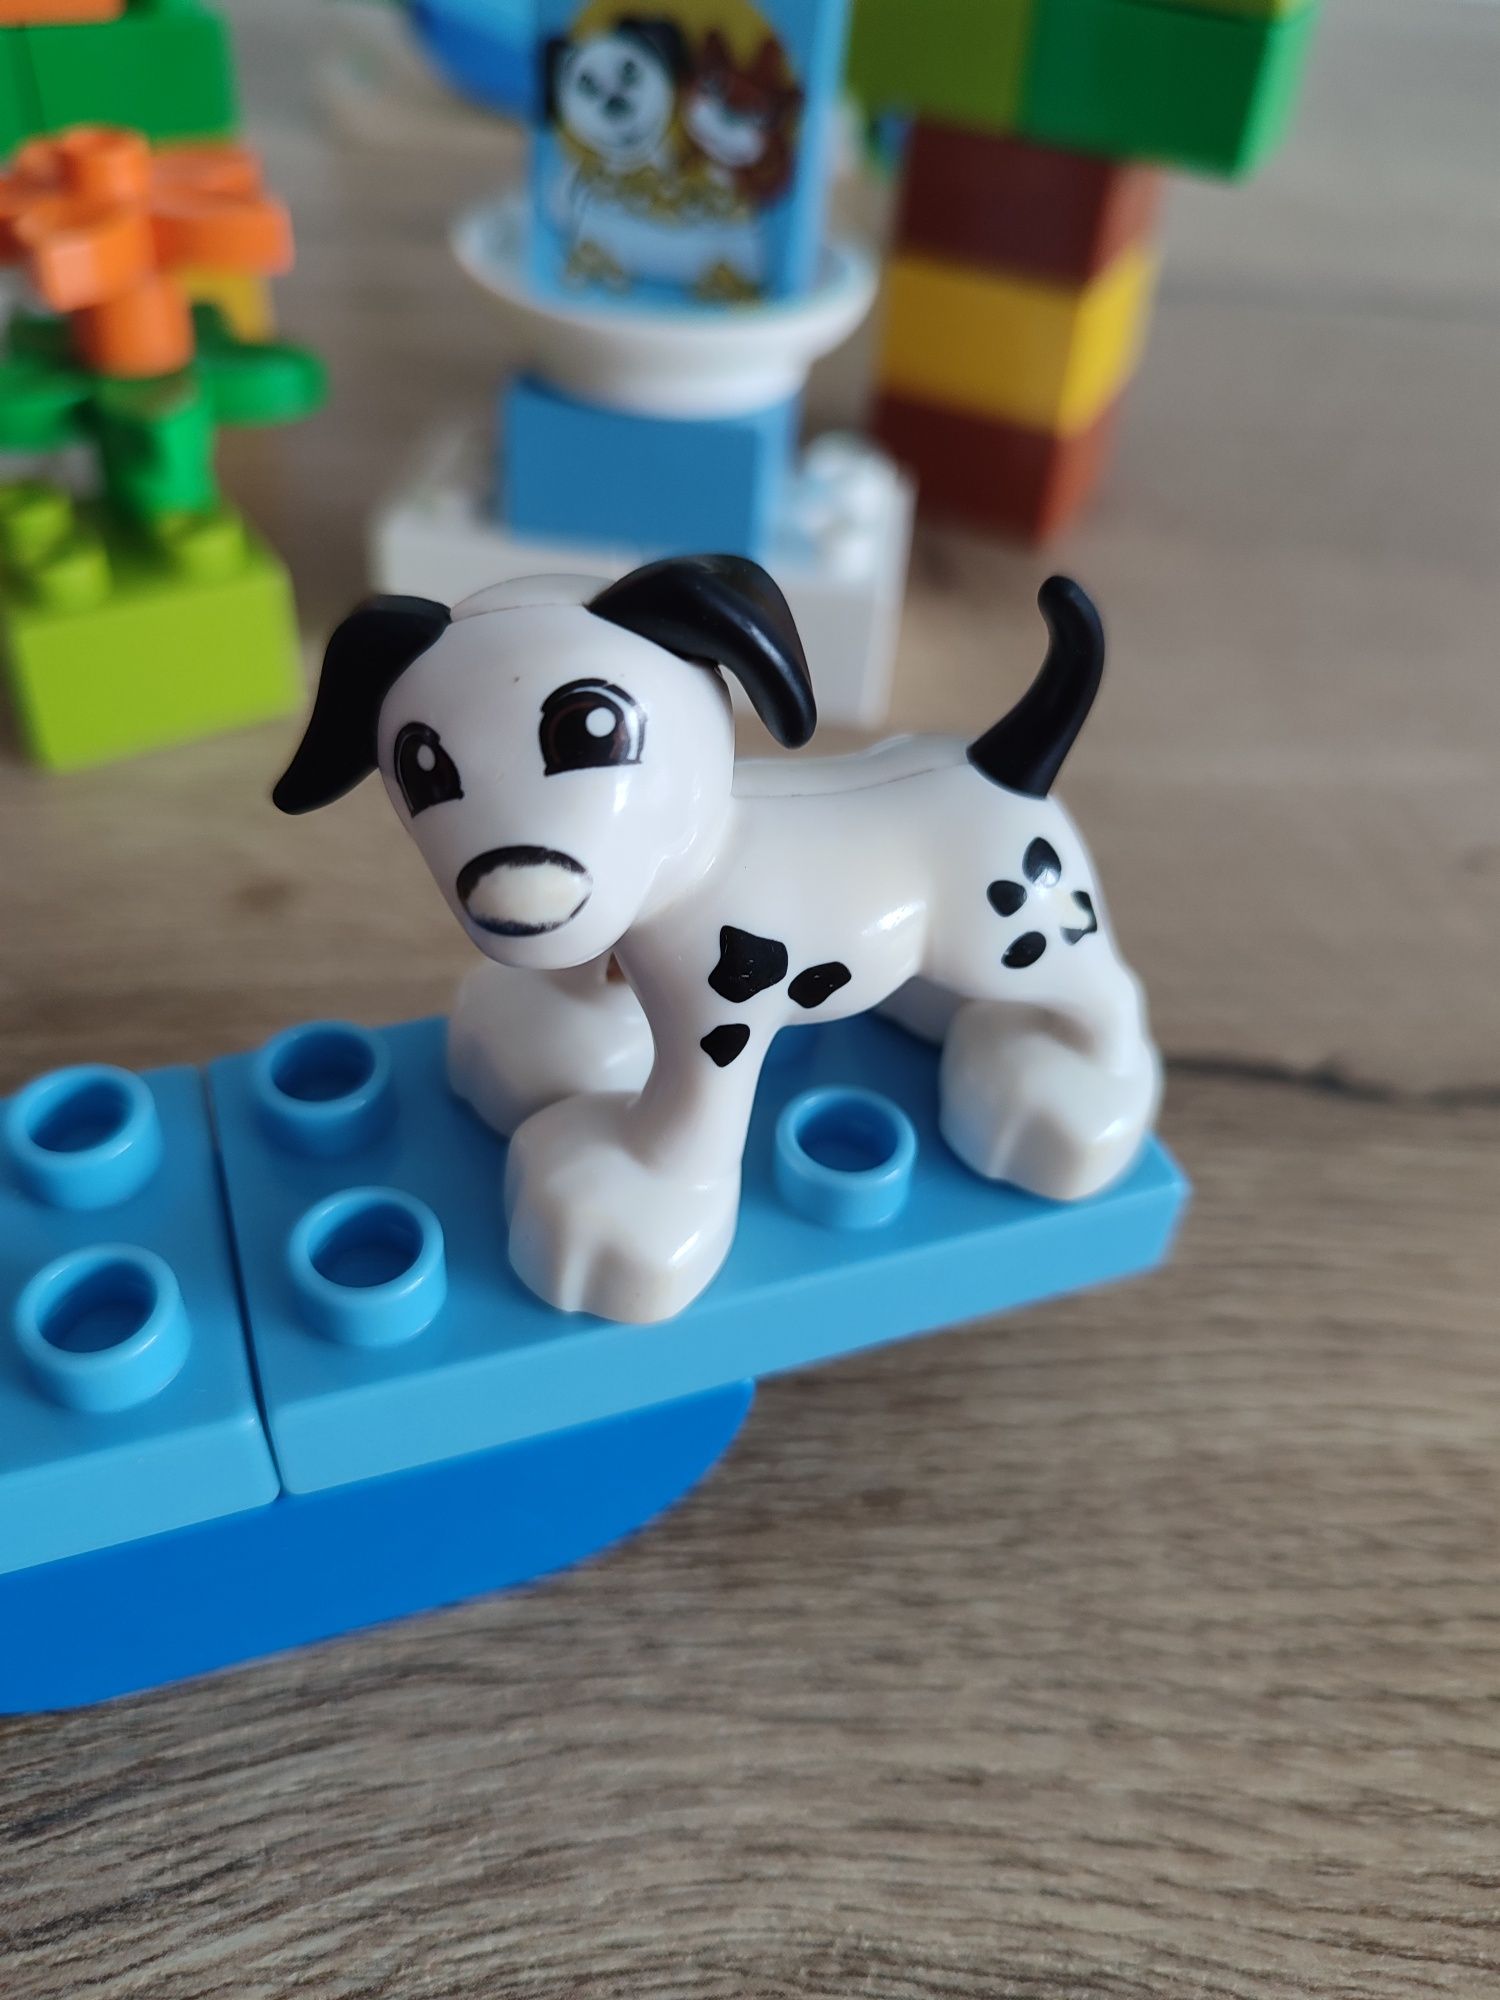 Lego Duplo 4624 Plac zabaw pies i kot 1,5-5 lat